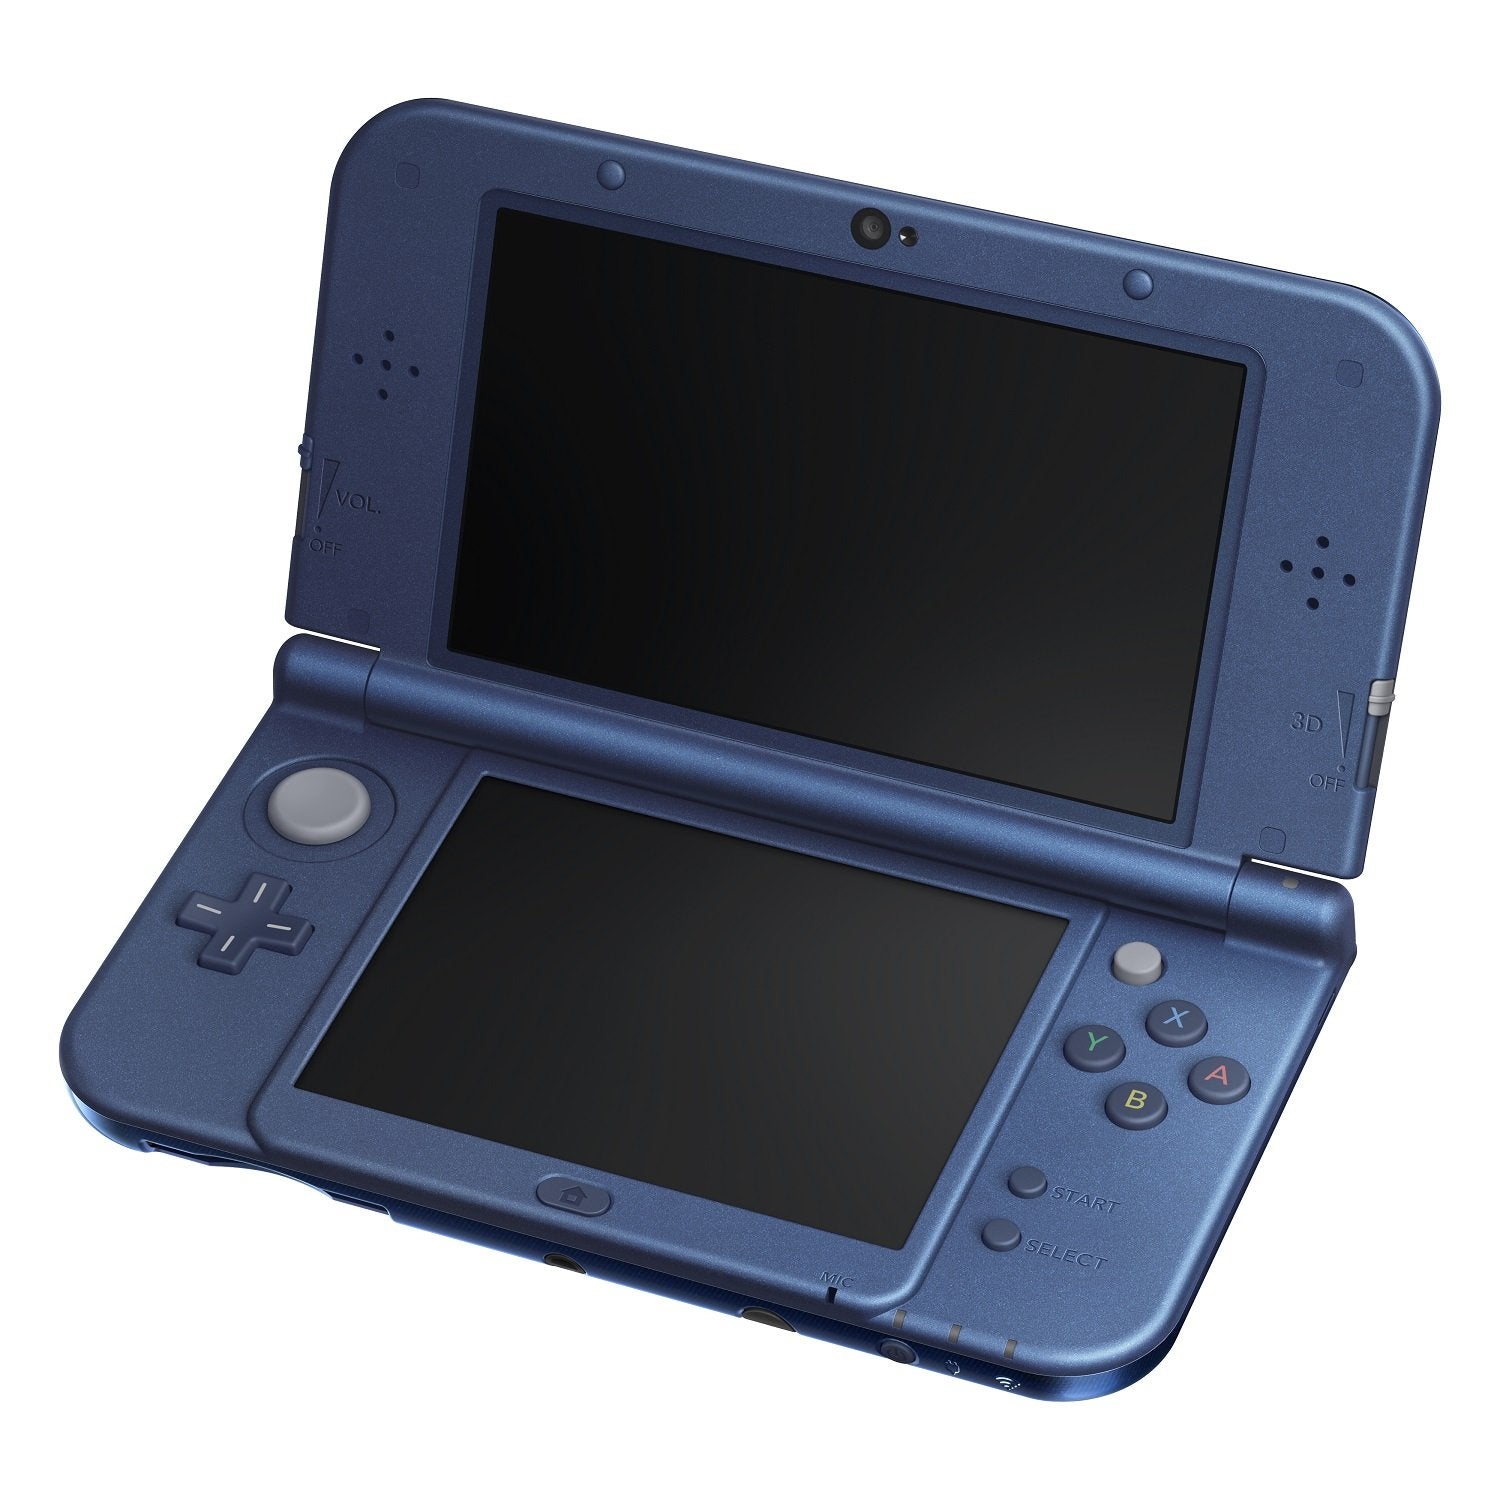 Nintendo 3DS - Navy Blue - Refurbished Good